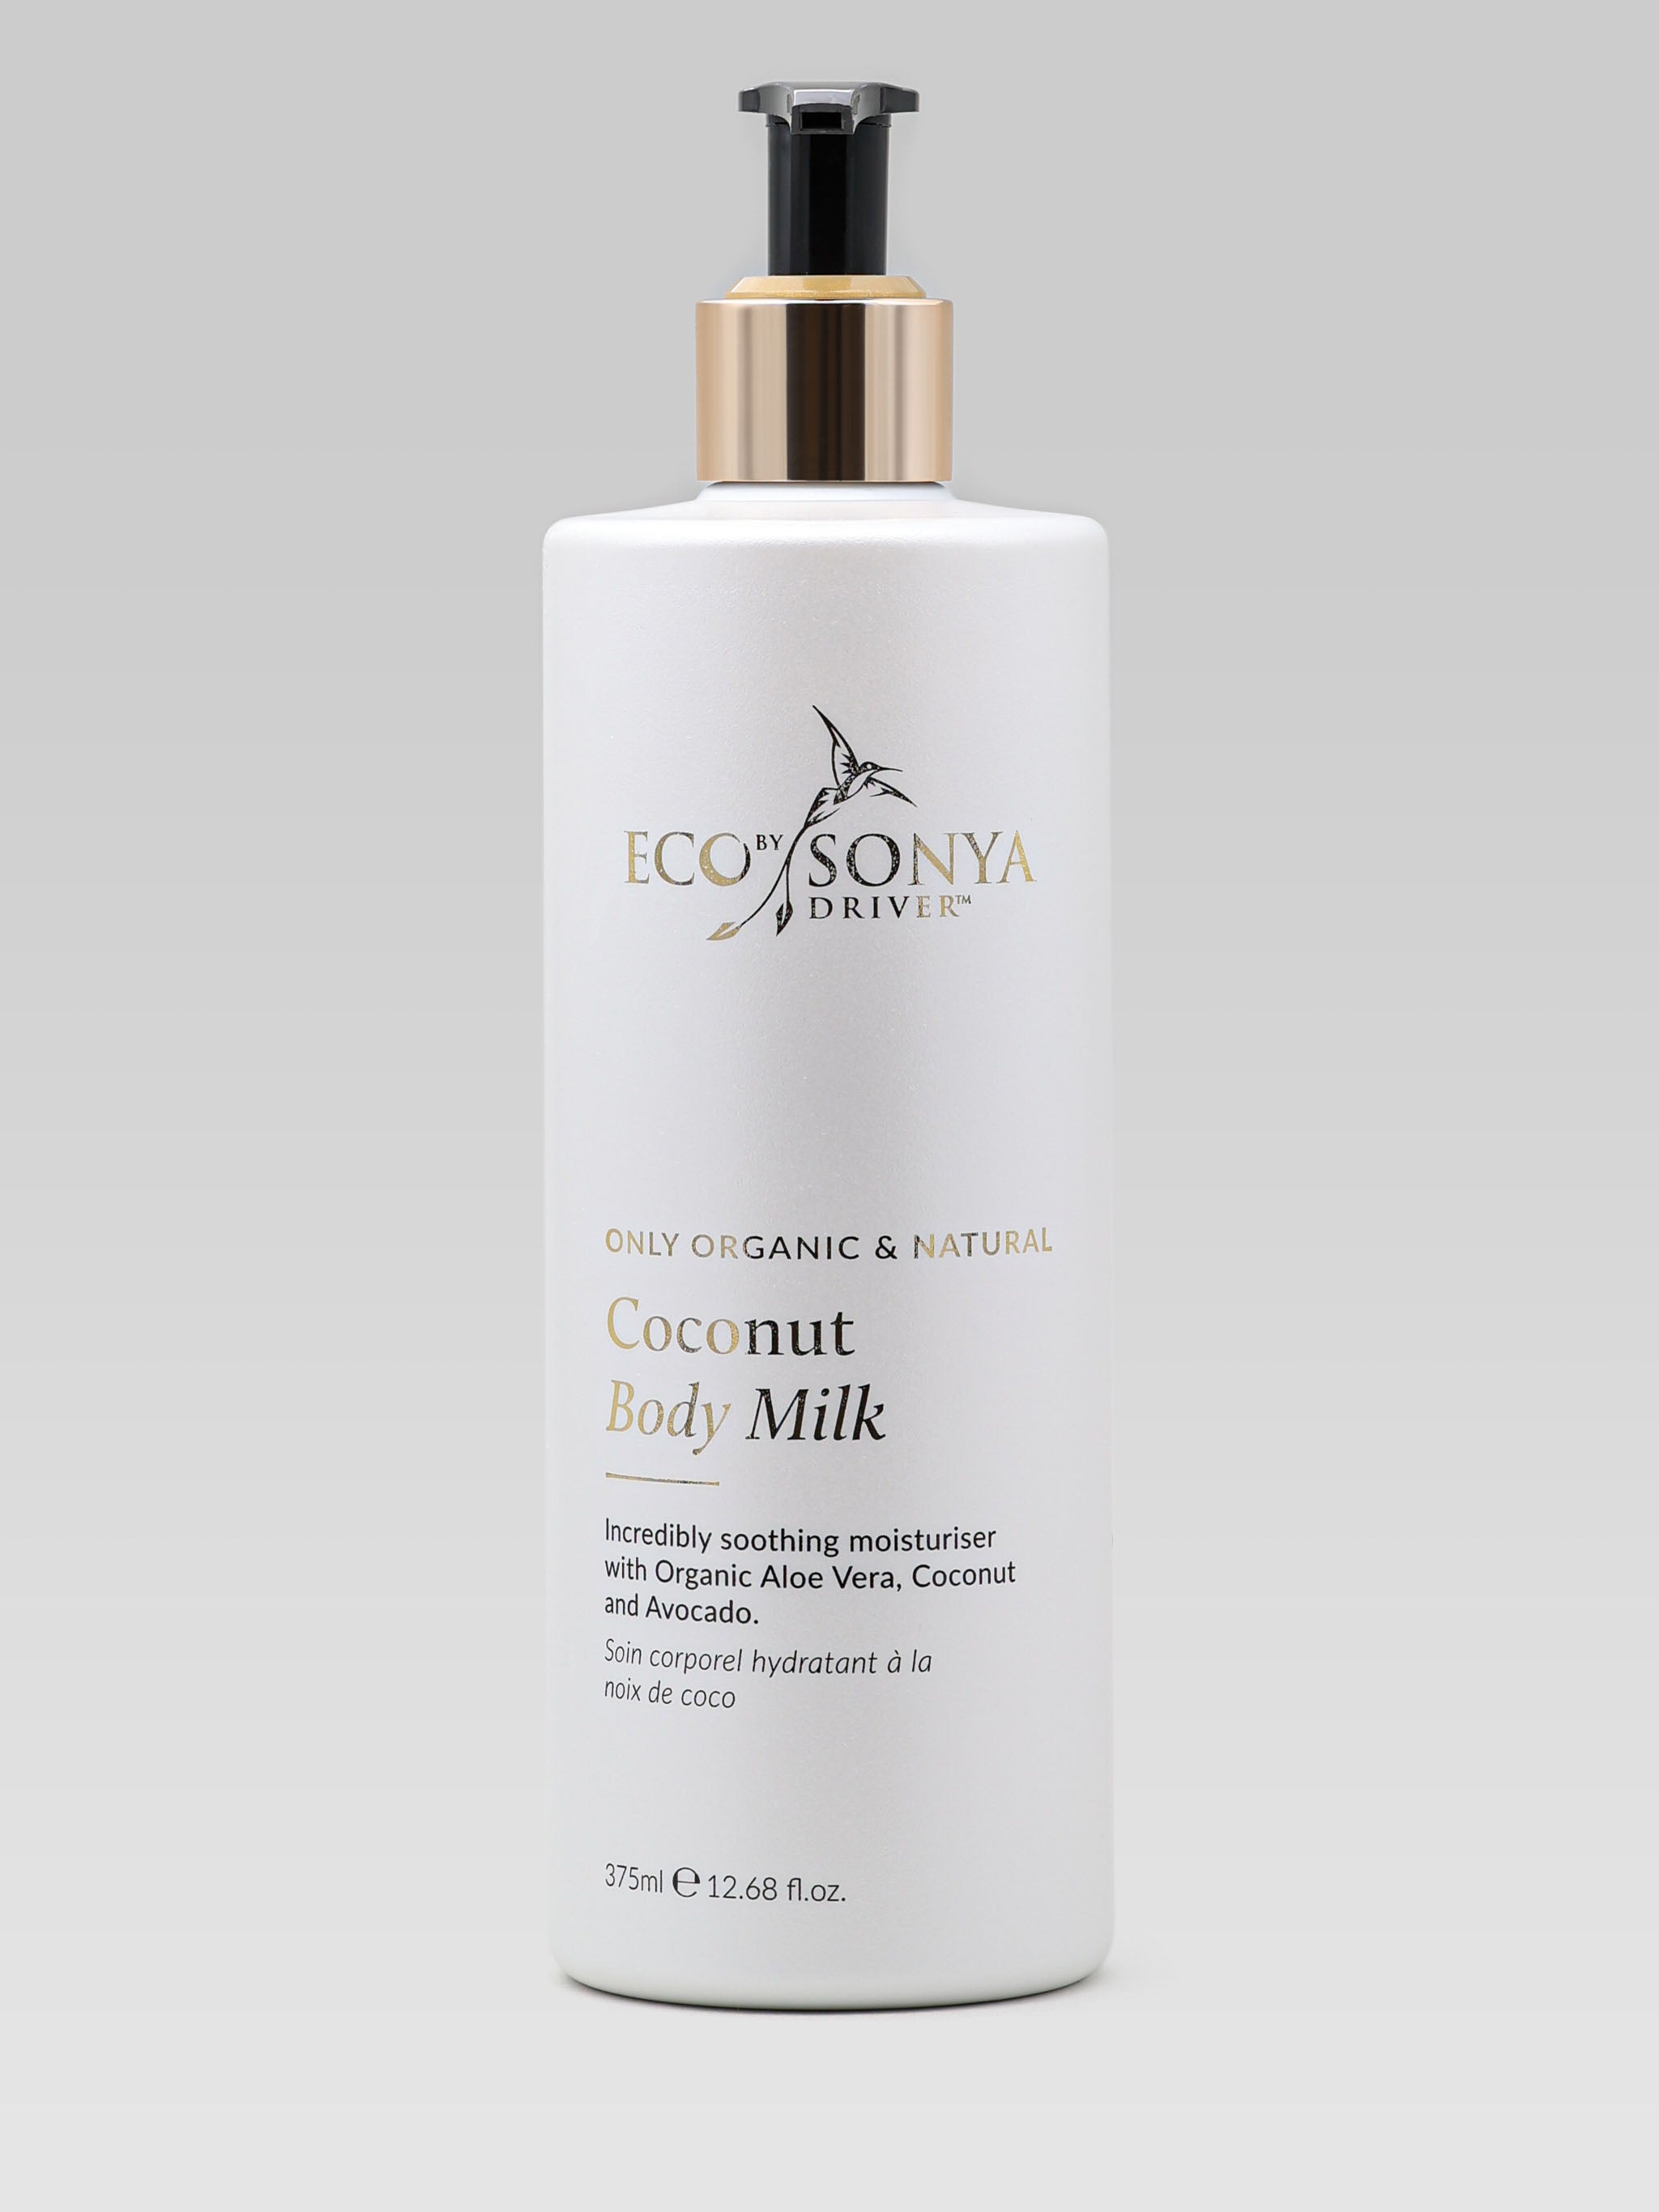 eco by sonya Coconut Body Milk product shot